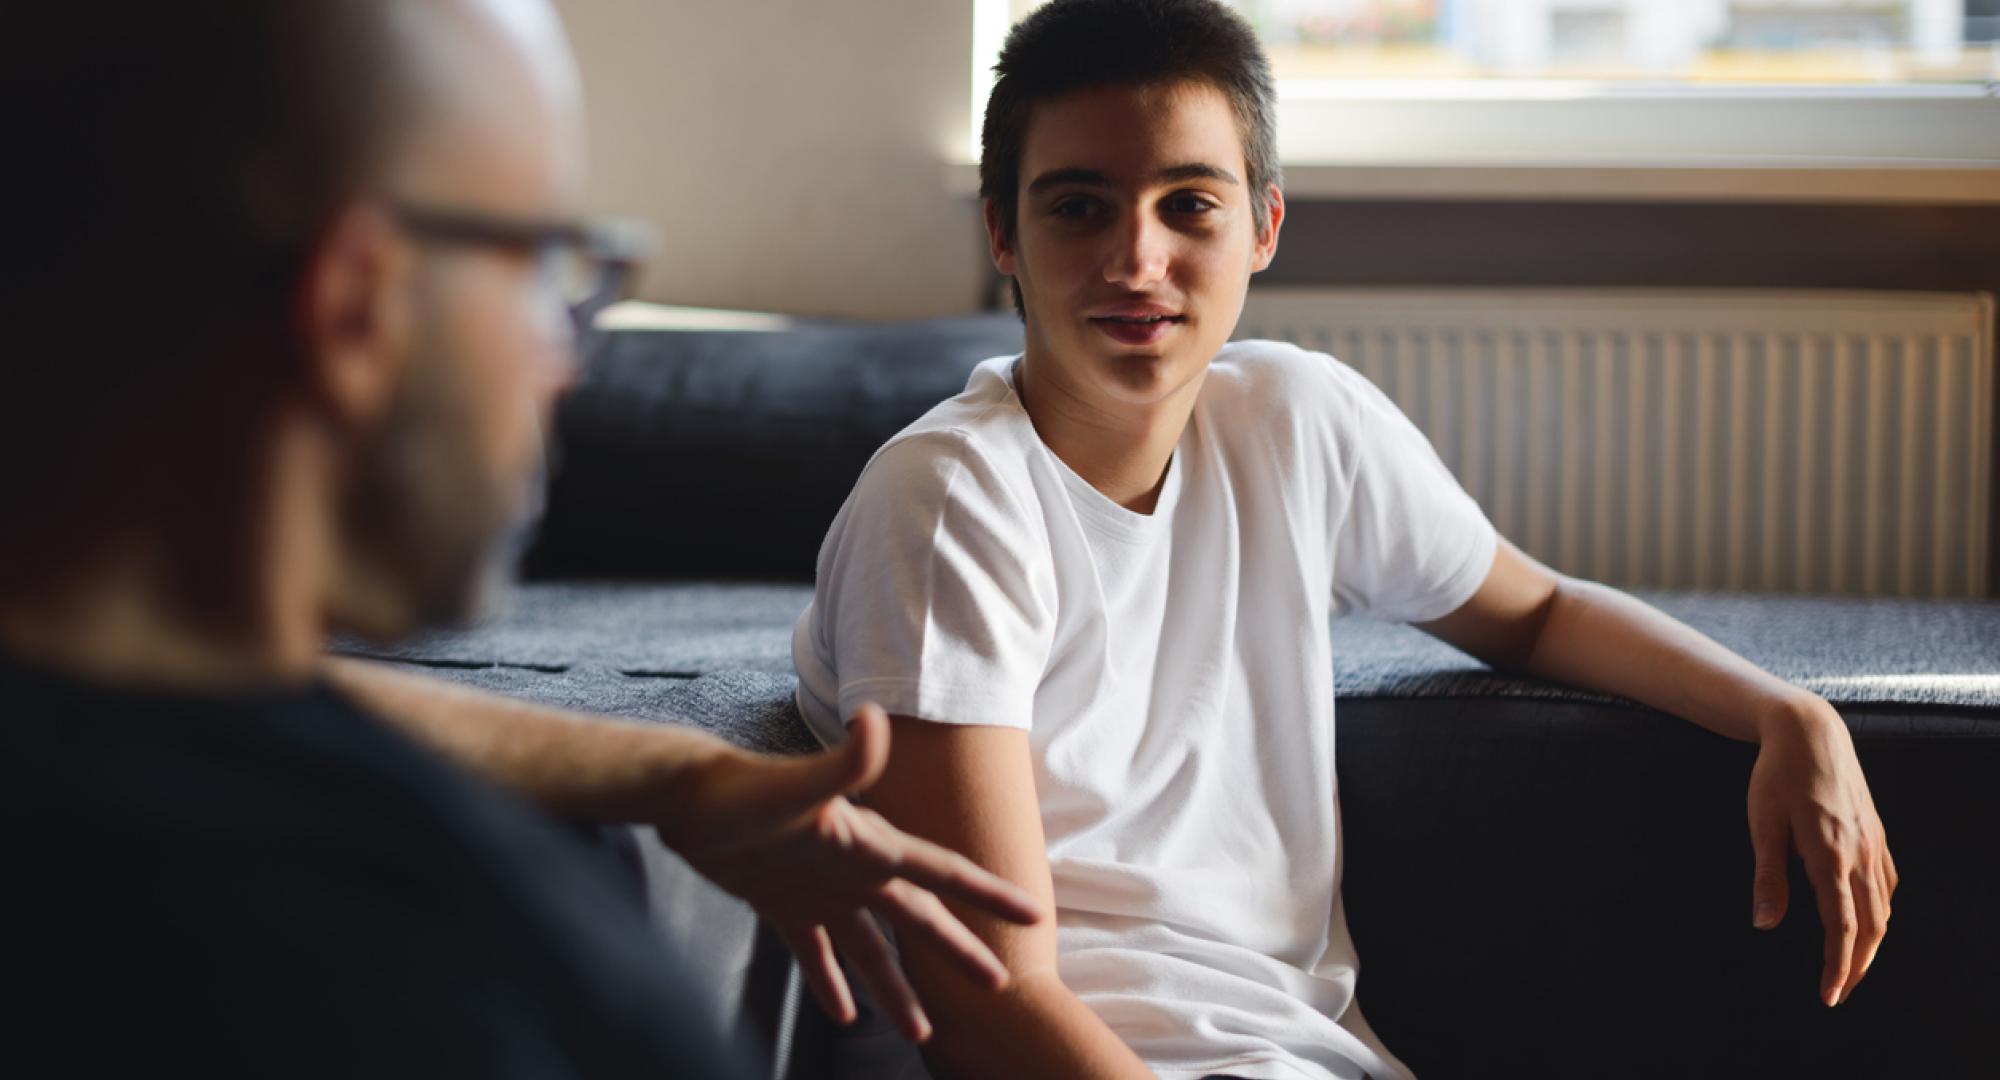 Adult man mentoring a teenage boy